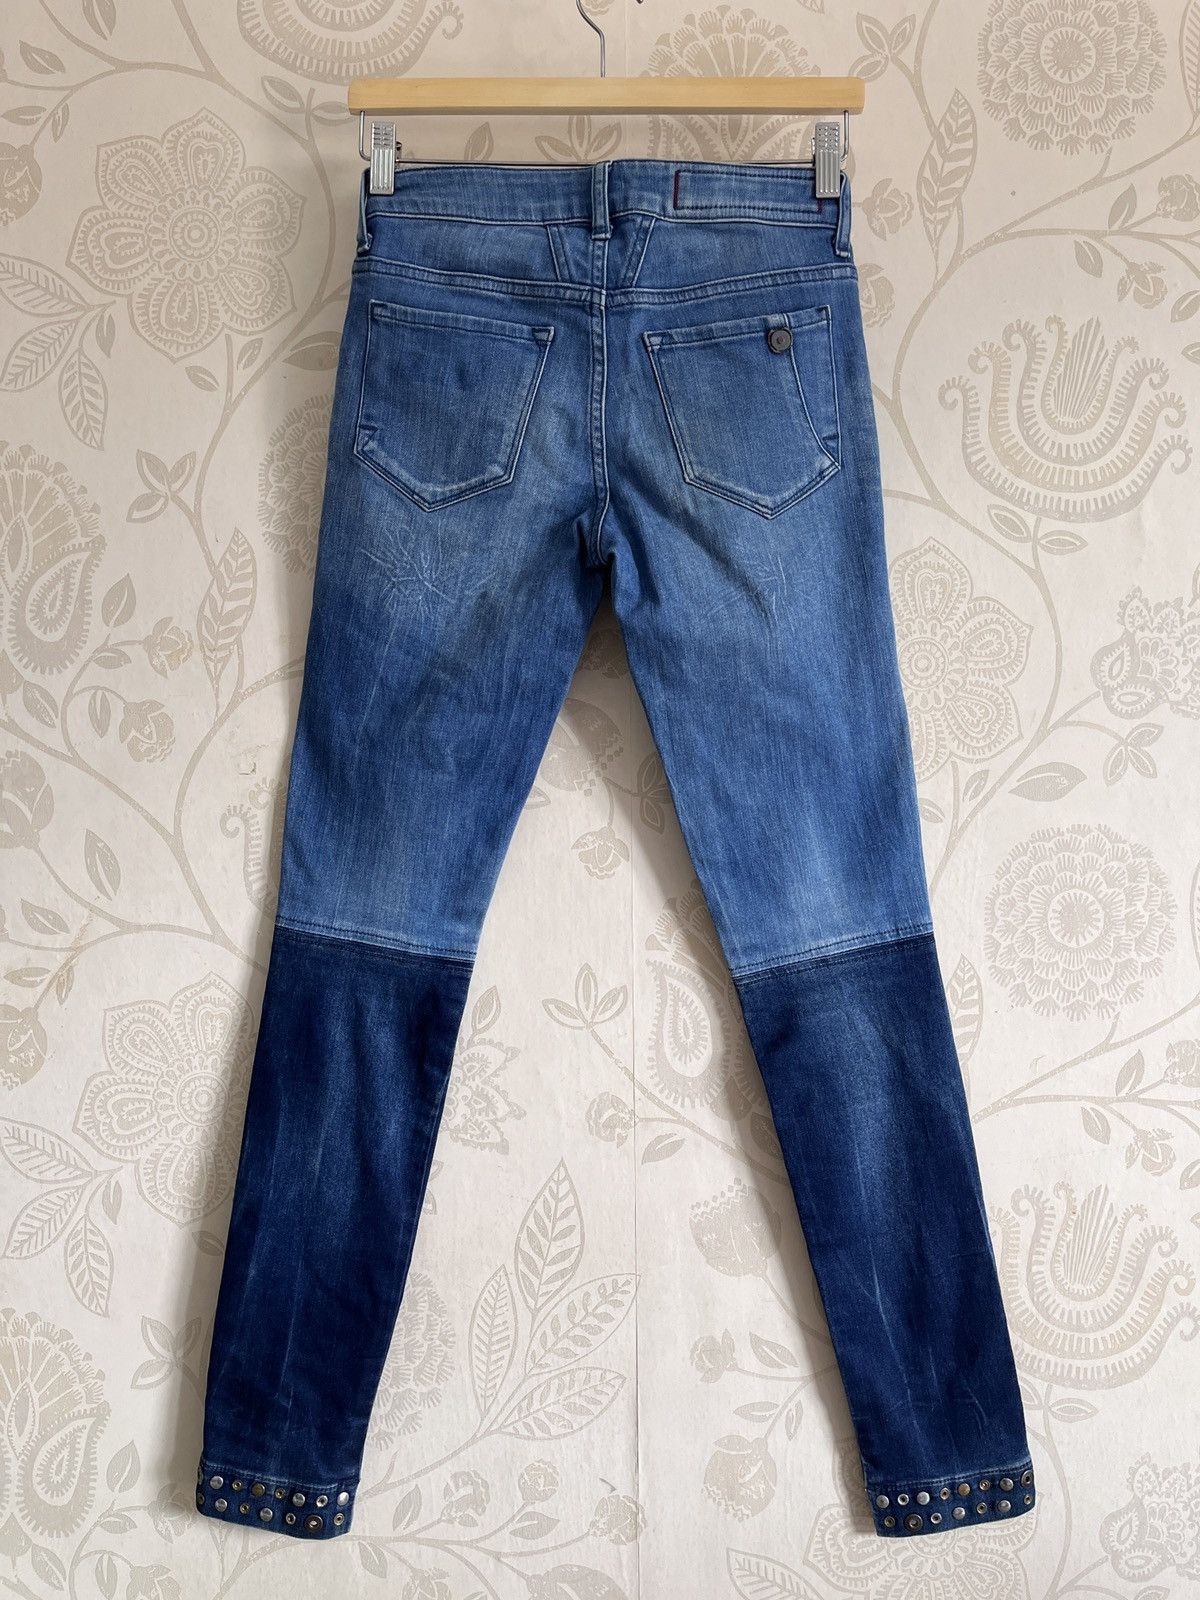 Marithe Francois Girbaud Skinny Ankle Signage Denim Jeans - 25